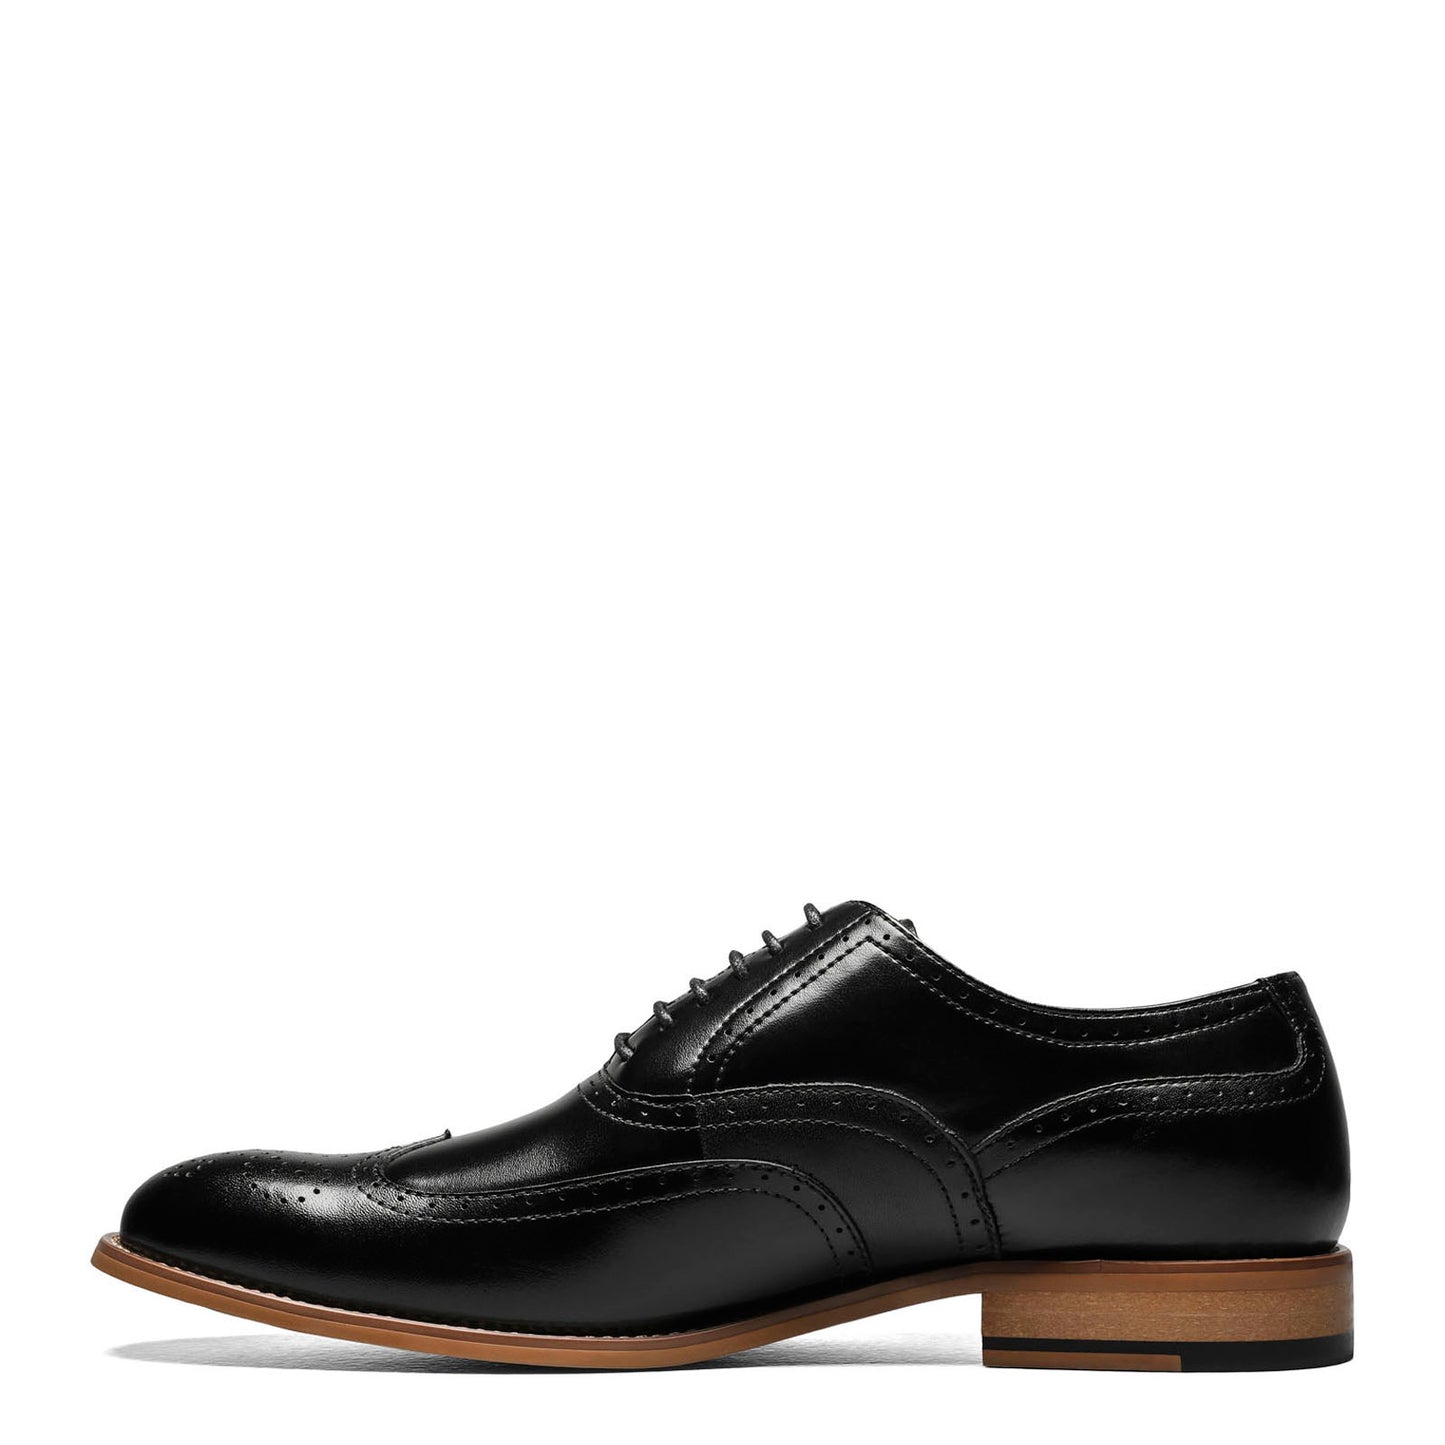 Peltz Shoes  Men's Stacy Adams Dunbar Wingtip Oxford BLACK 25064-001